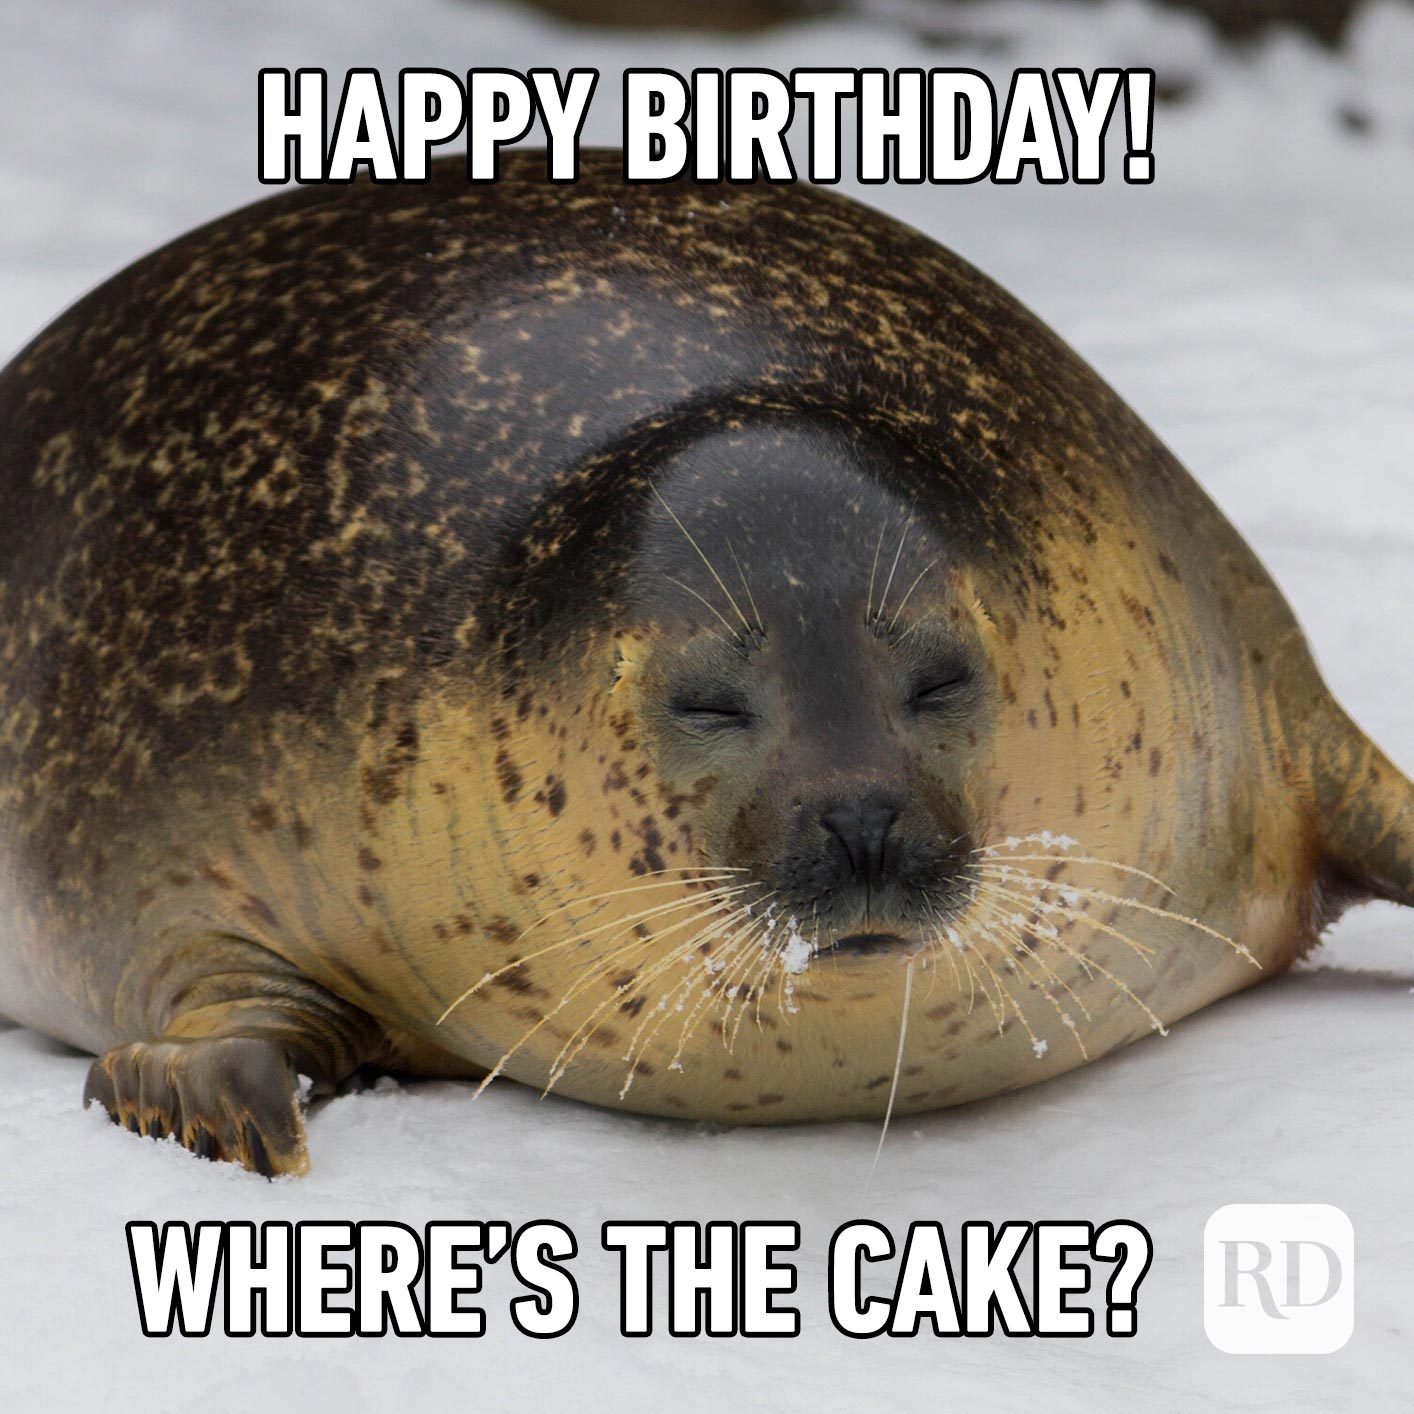 Happy Birthday! Where's the cake?